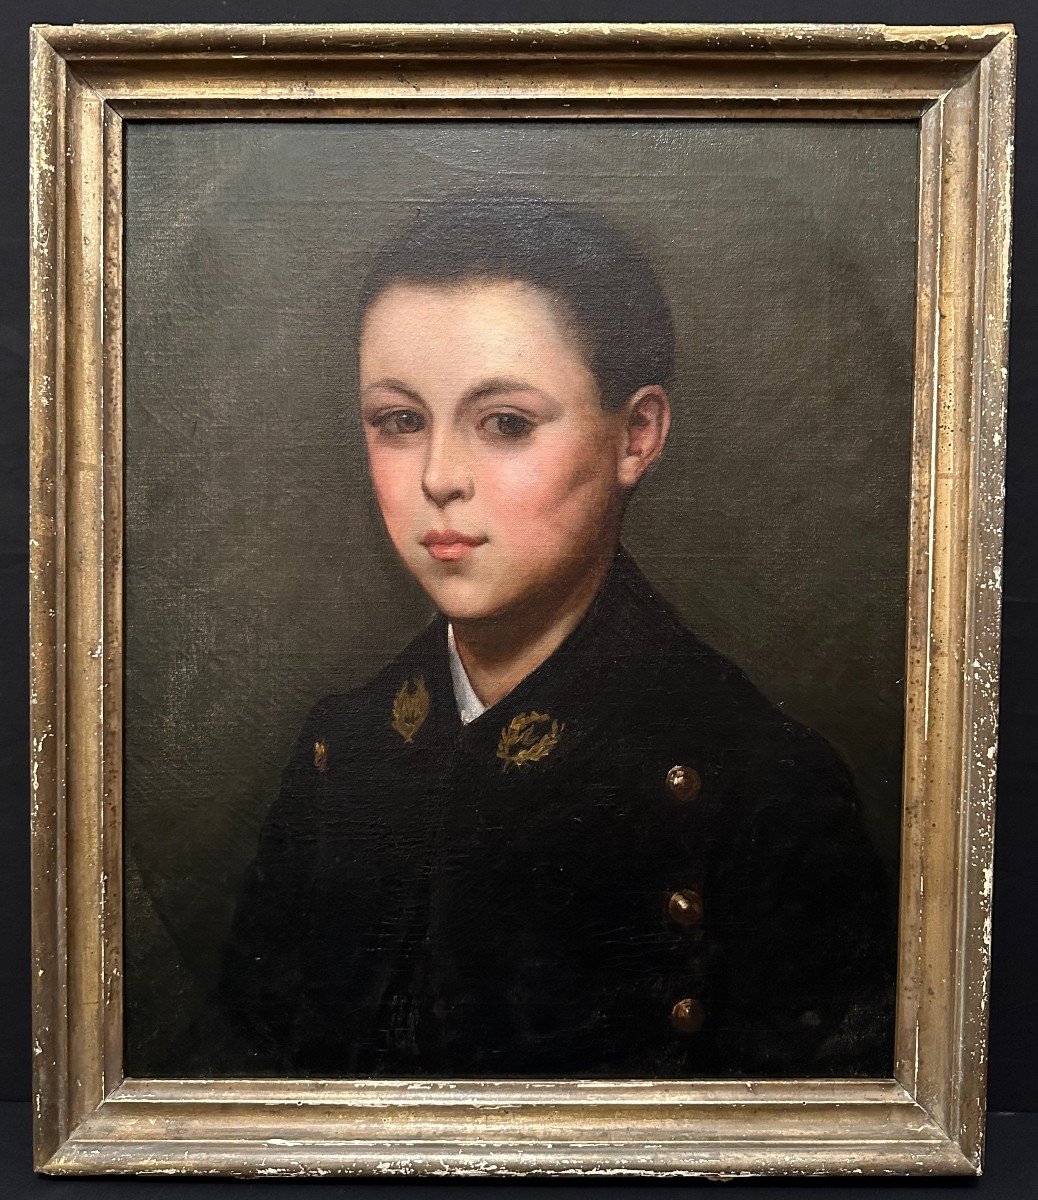 Painting Portrait Of Child In Uniform 19th Century